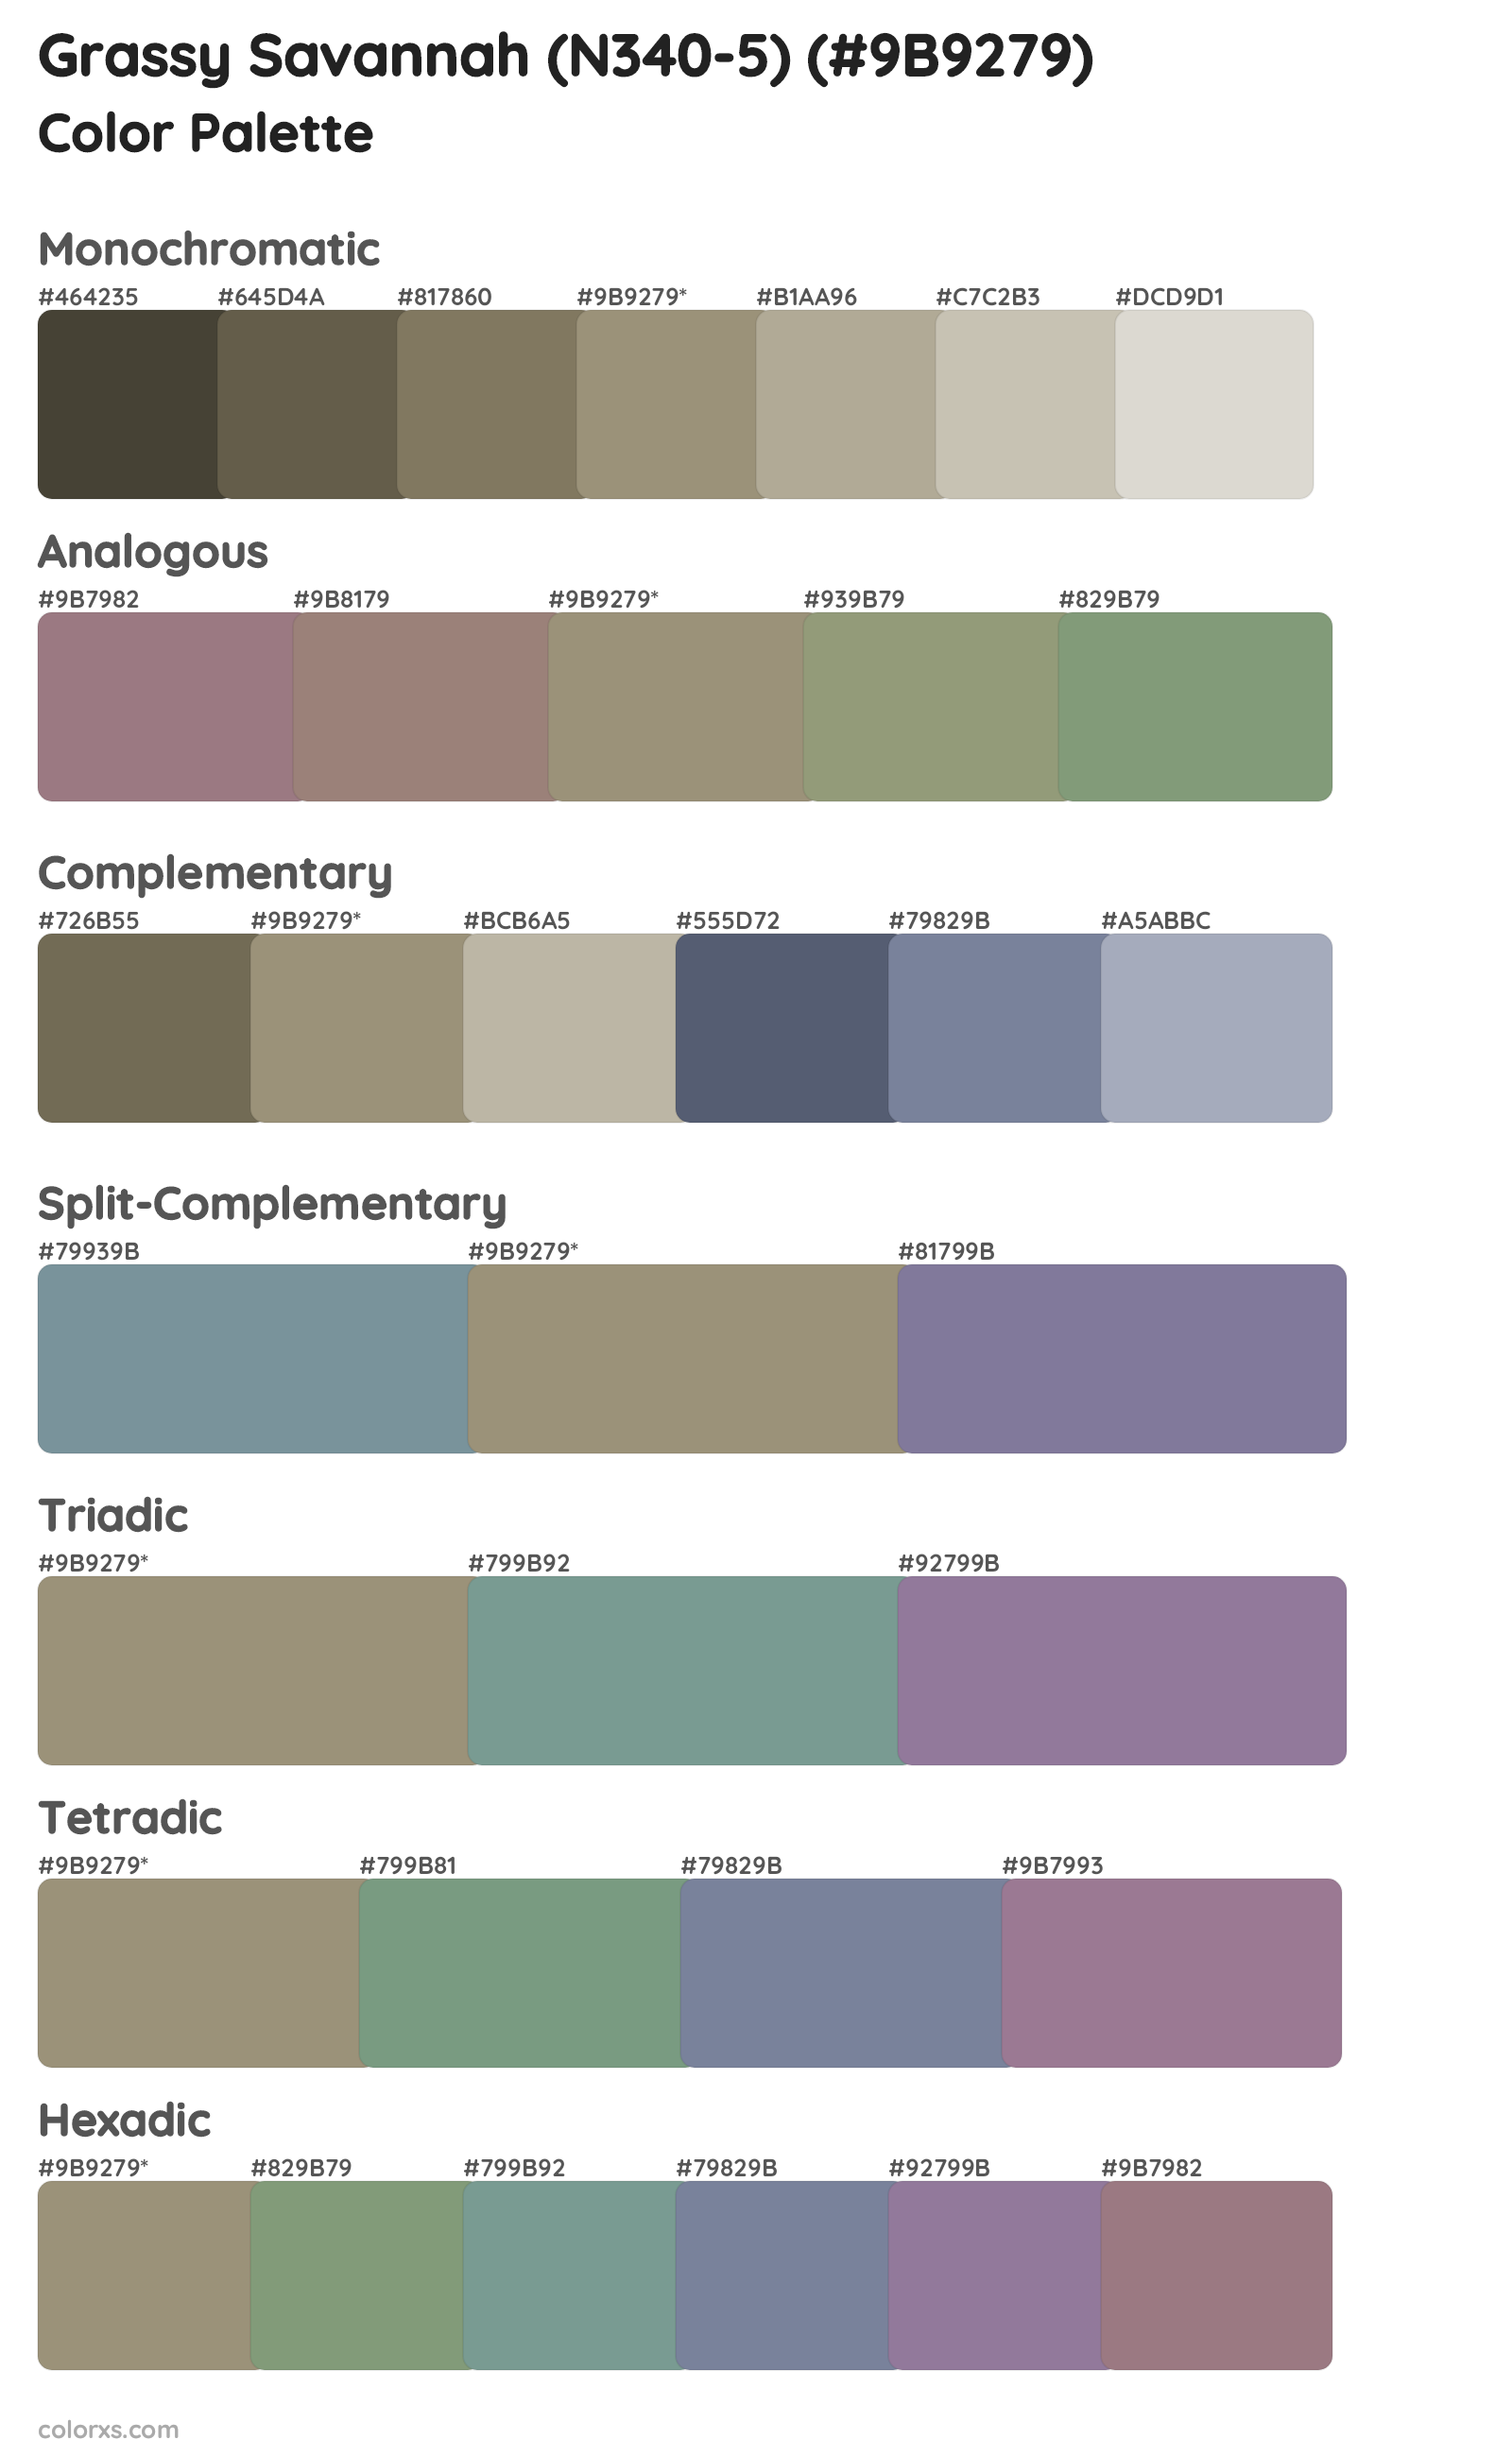 Grassy Savannah (N340-5) Color Scheme Palettes